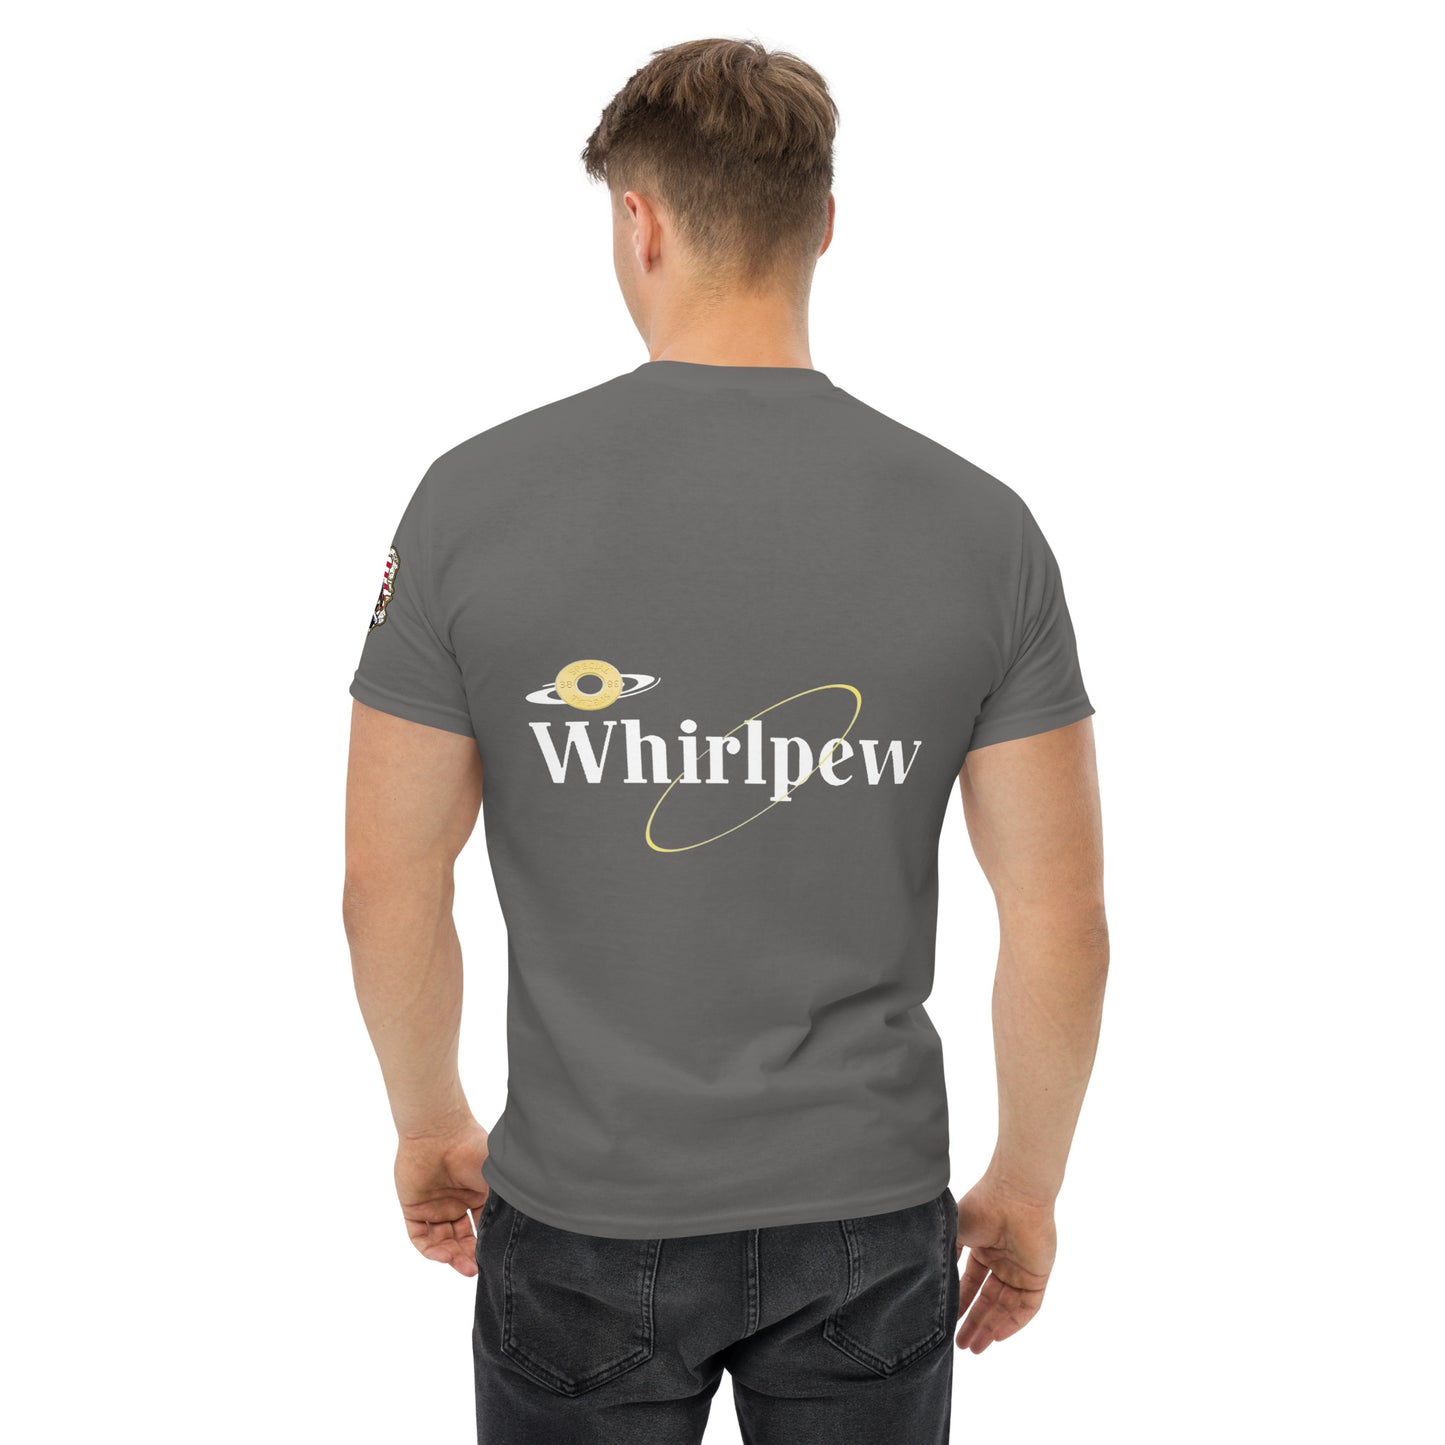 Whirlpew- Whirlpool Parody